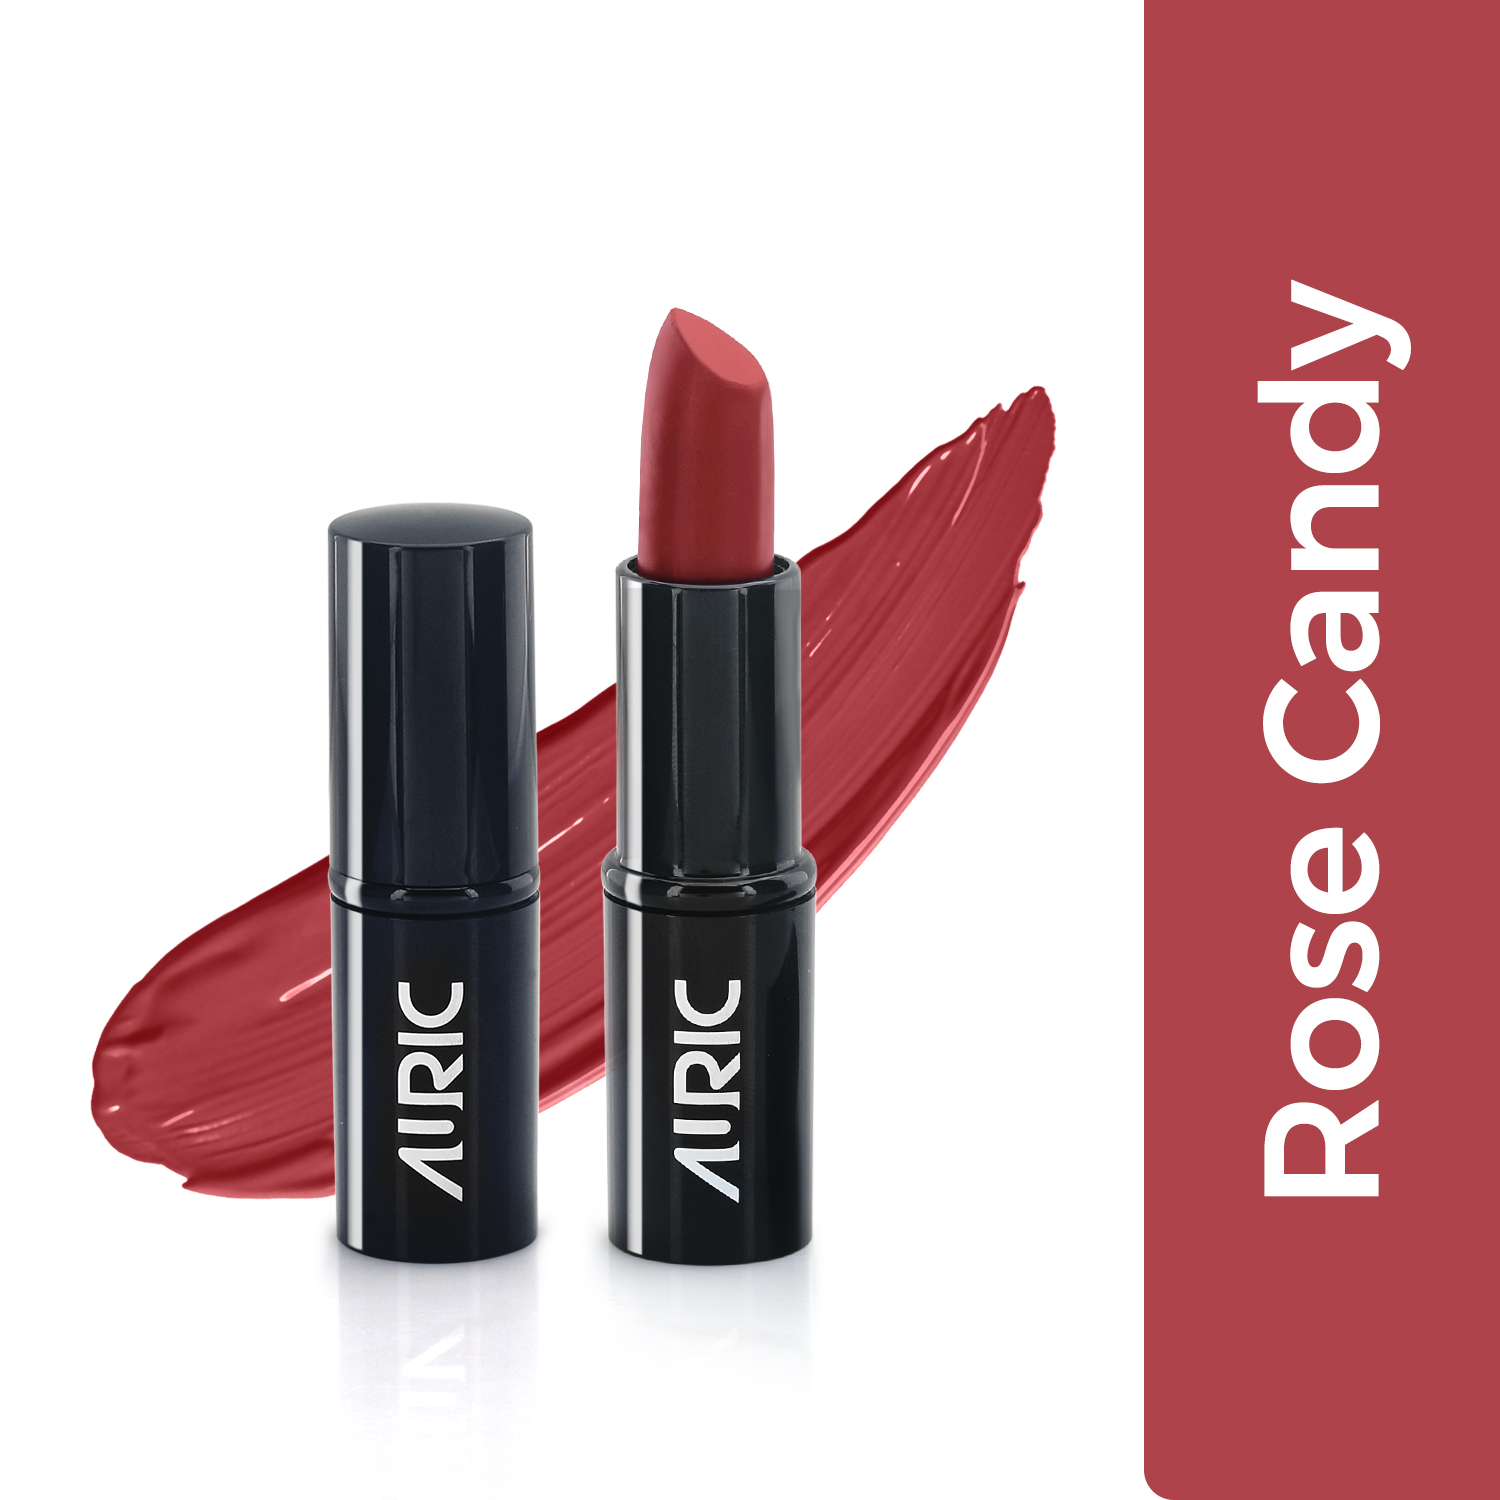 Auric MoistureLock Lipstick, Rose Candy - 4 g